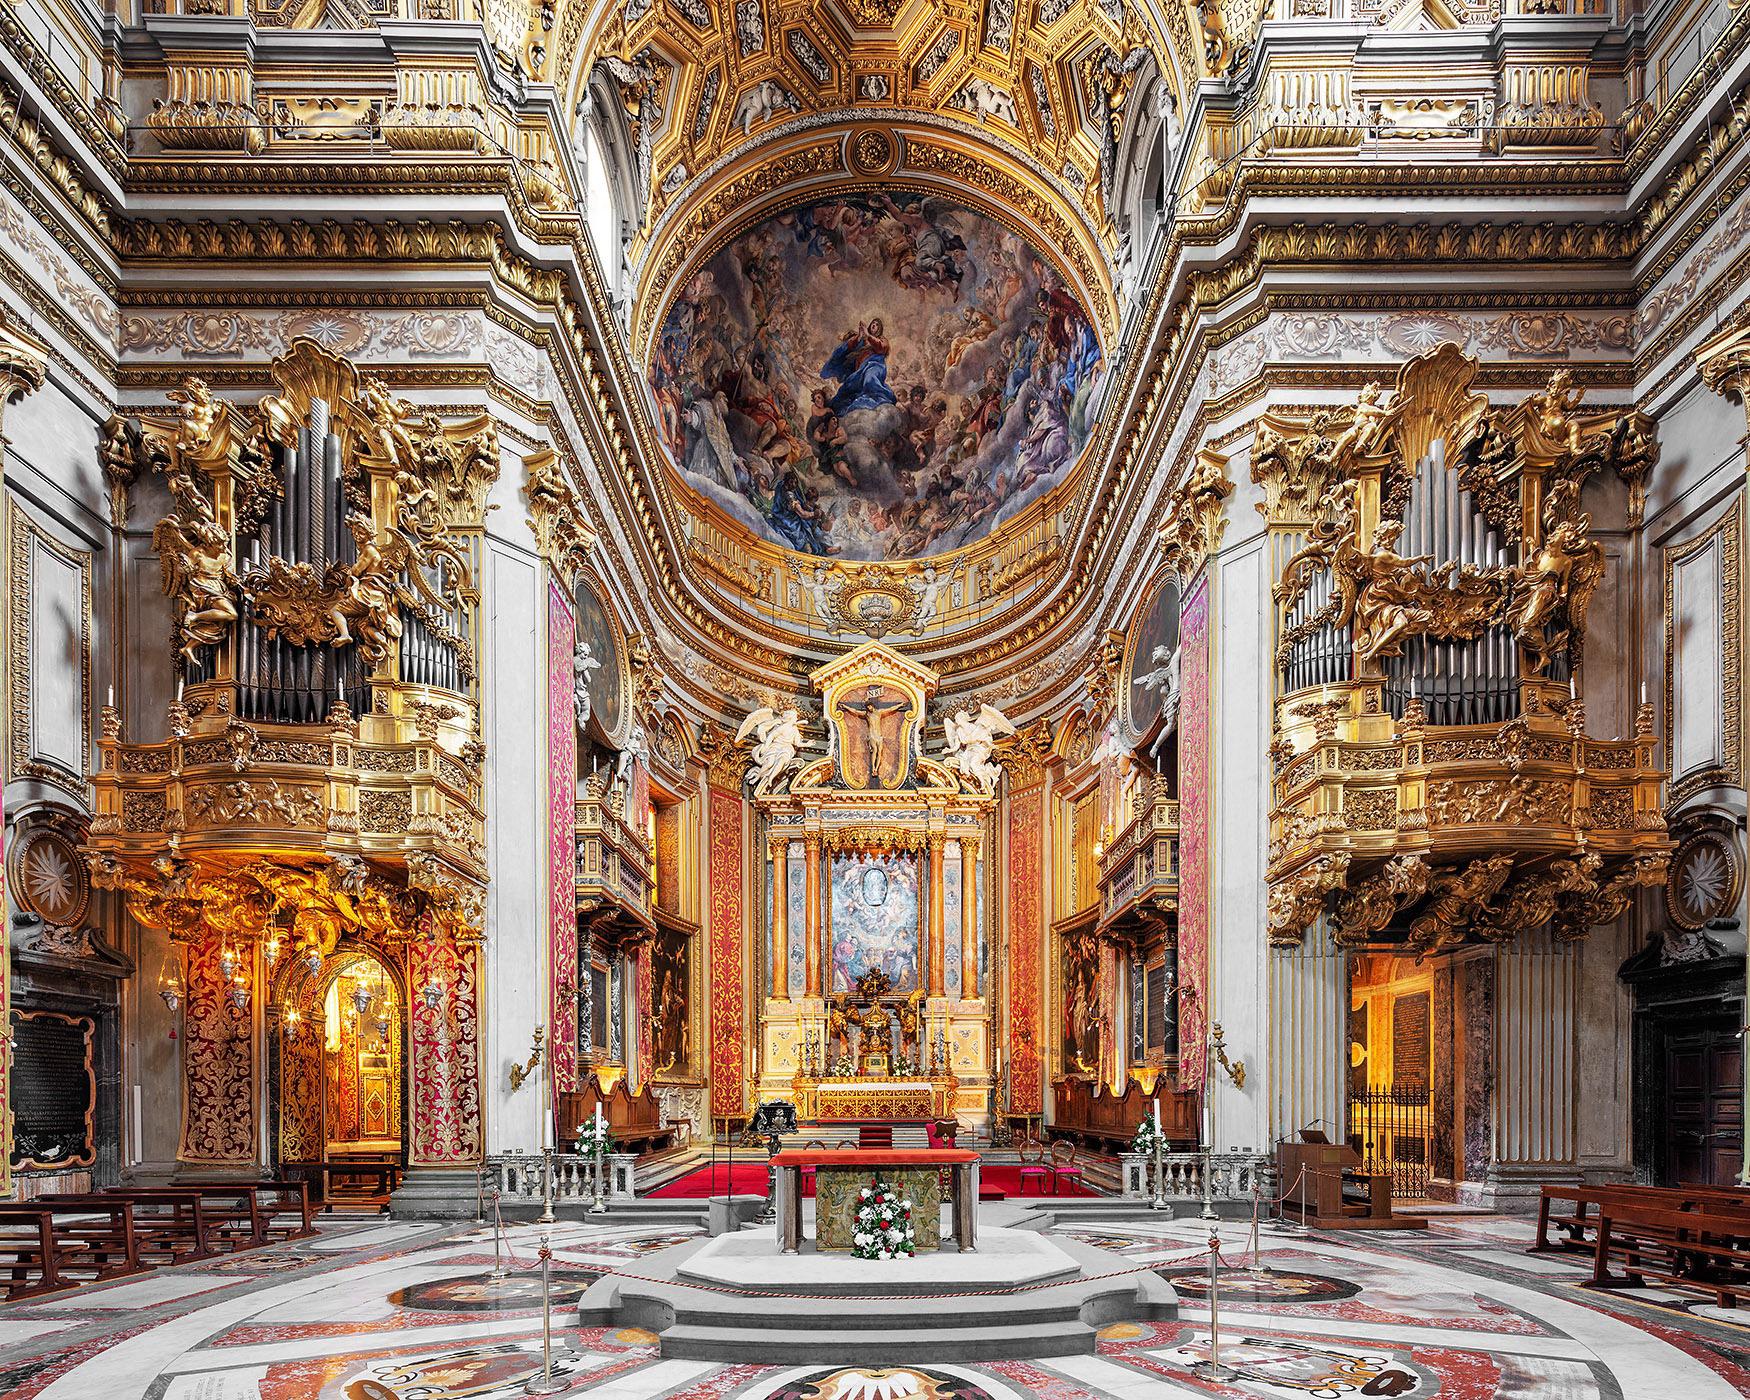 Mac Oller Color Photograph - Chiesa Nuova II, Rome, Italy, Churches of Rome